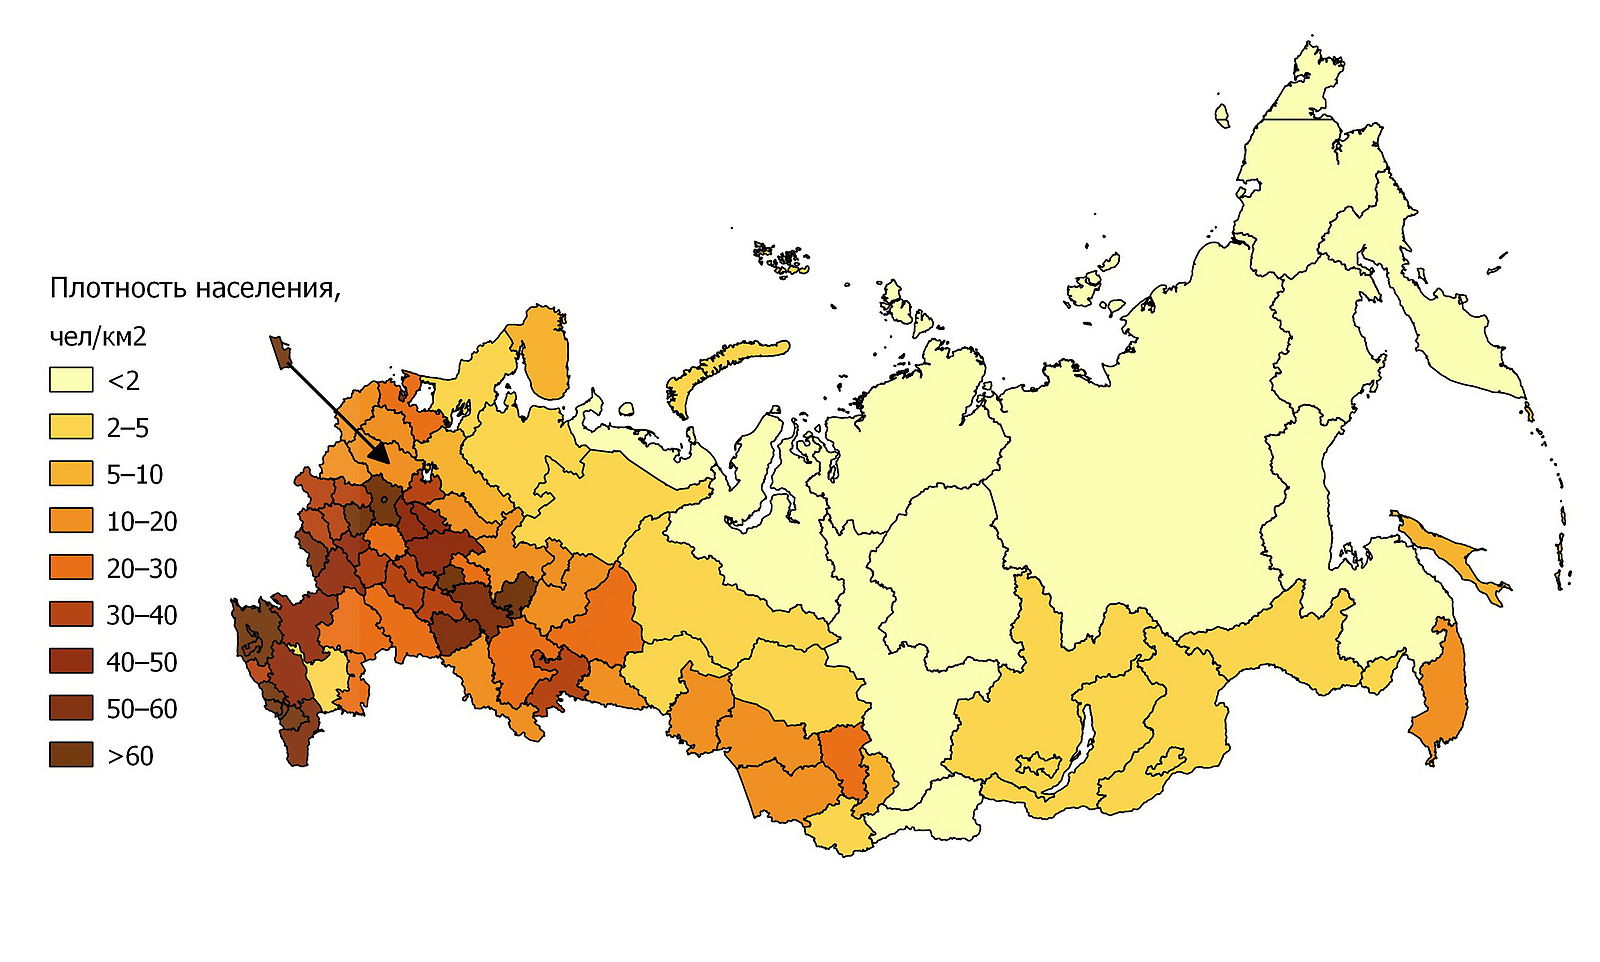 1600px-Russia%27s_population_density_by_region.jpg